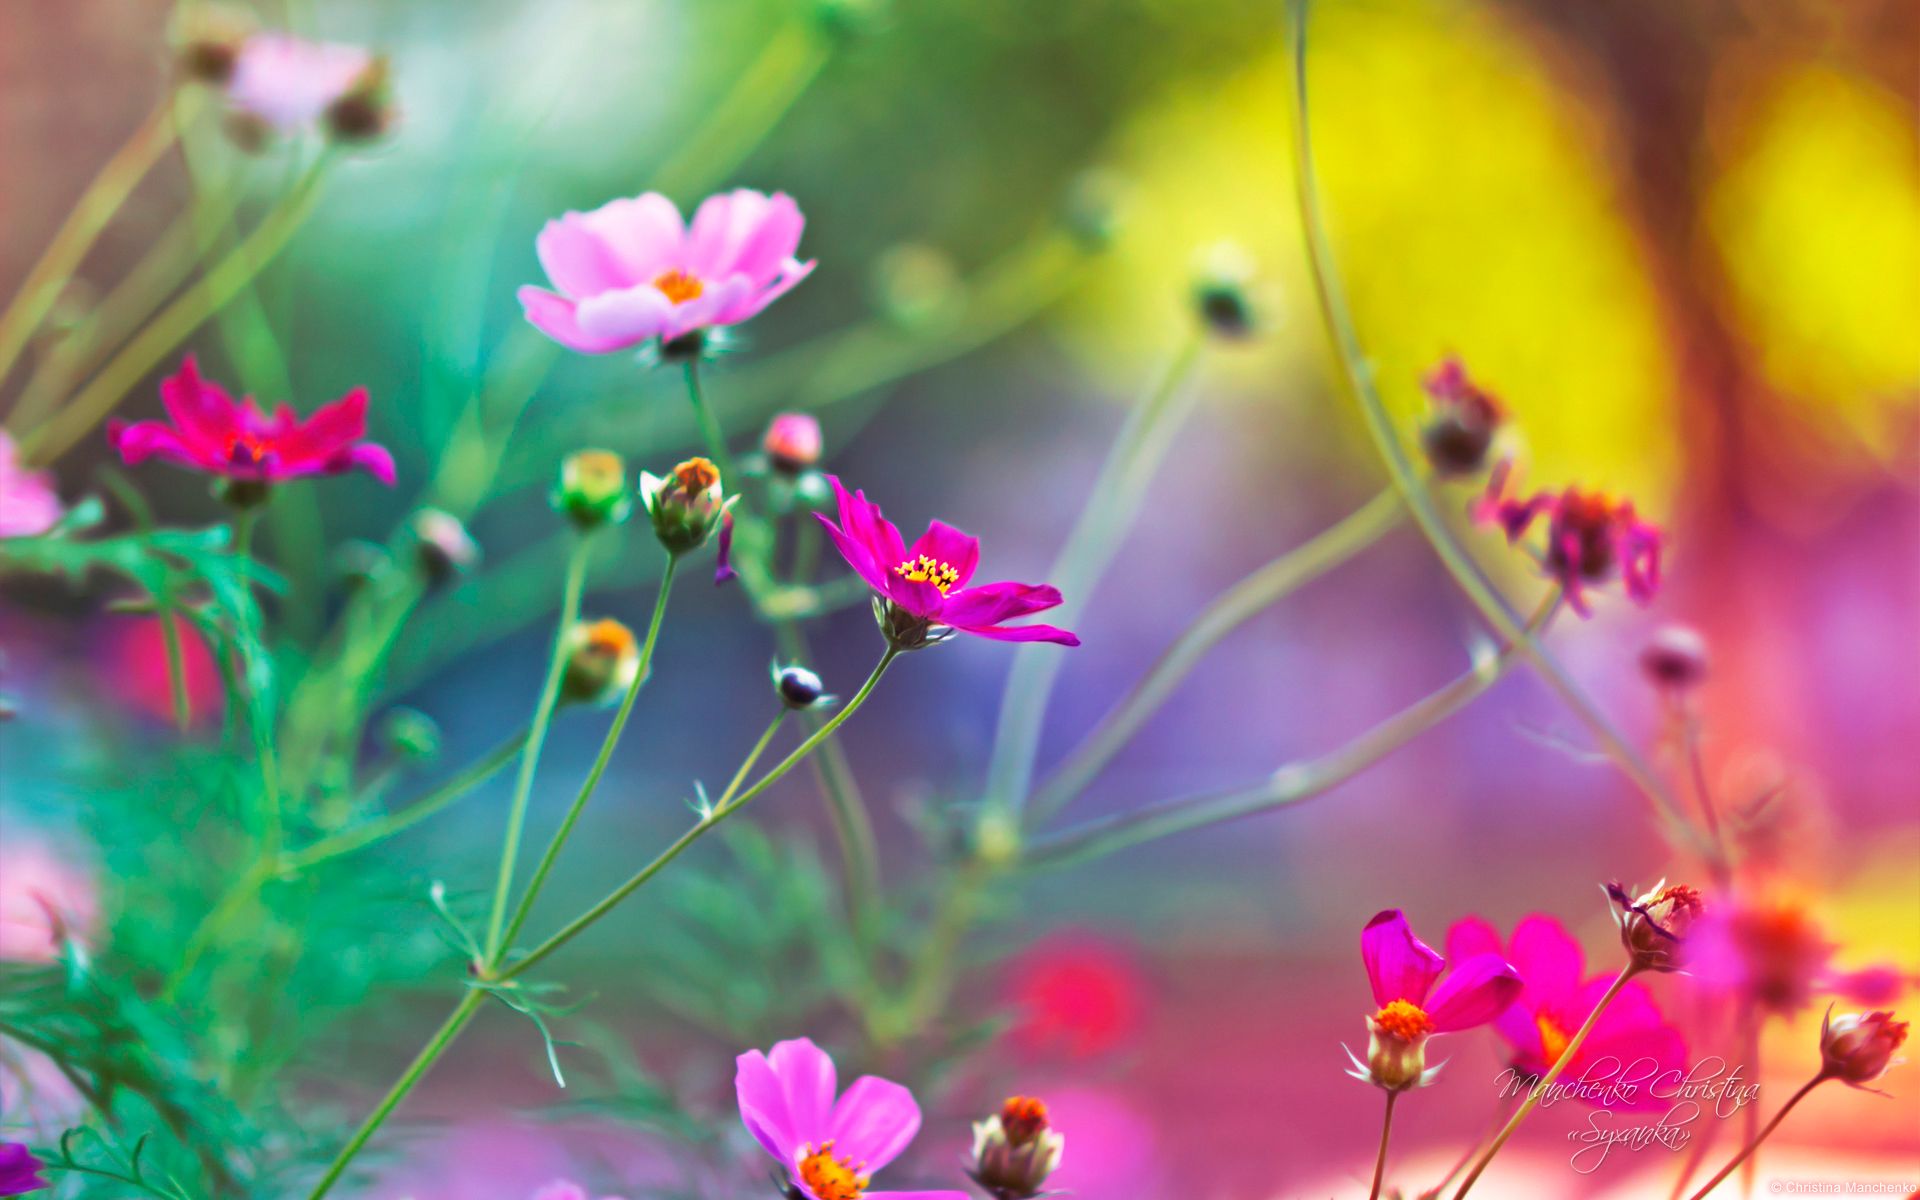 An excellent flower wallpaper for Windows 8 | HD Wallpapers